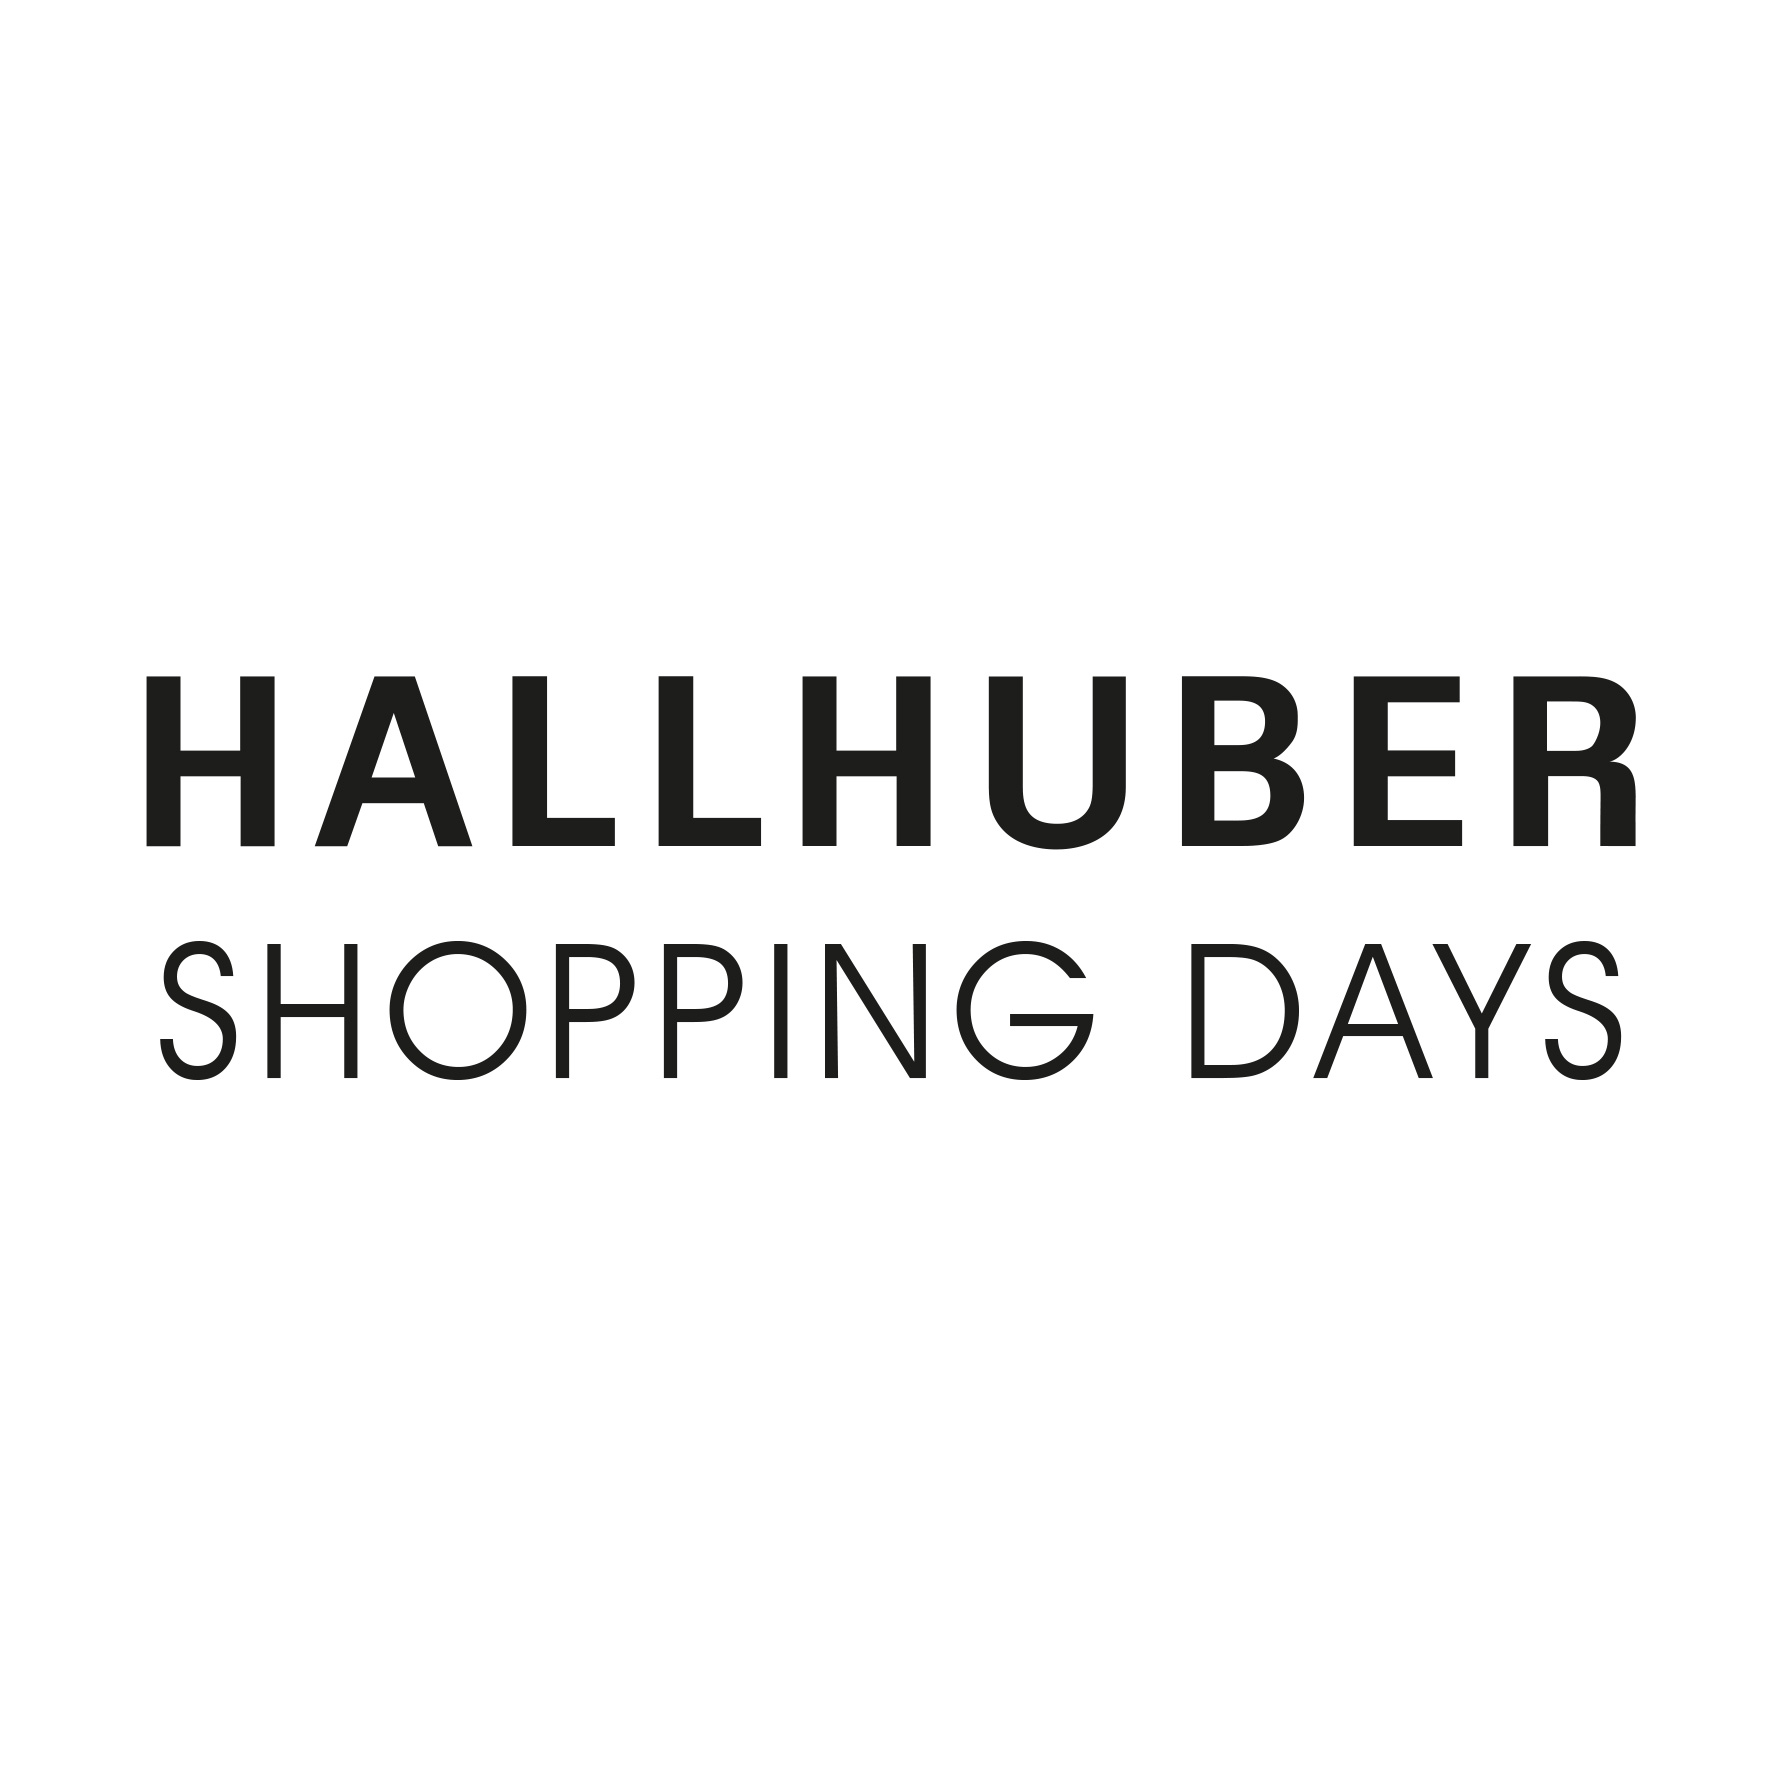 Hallhuber Shopping Days 20% Rabatt